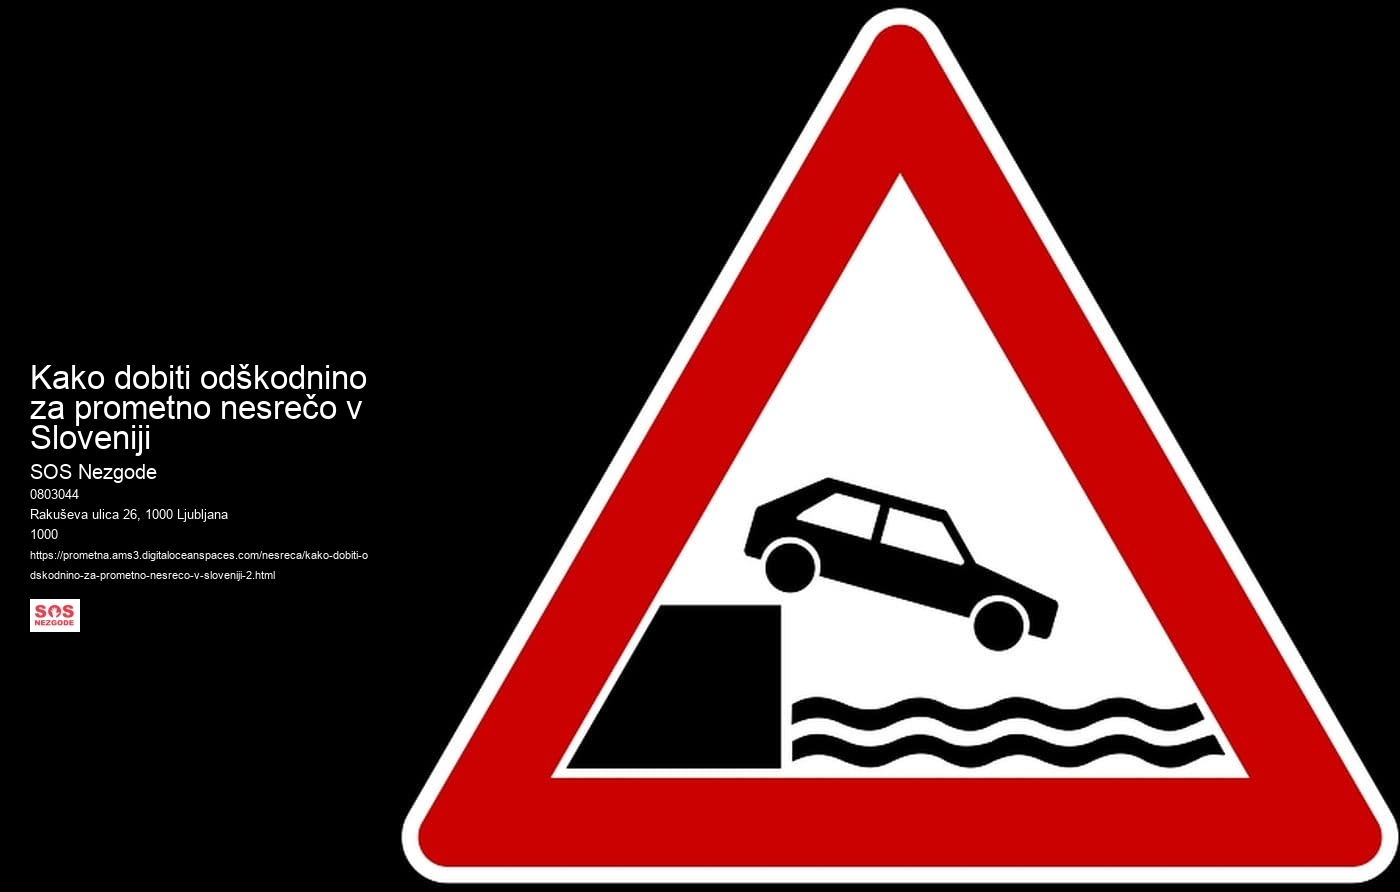 Kako dobiti odškodnino za prometno nesrečo v Sloveniji? 